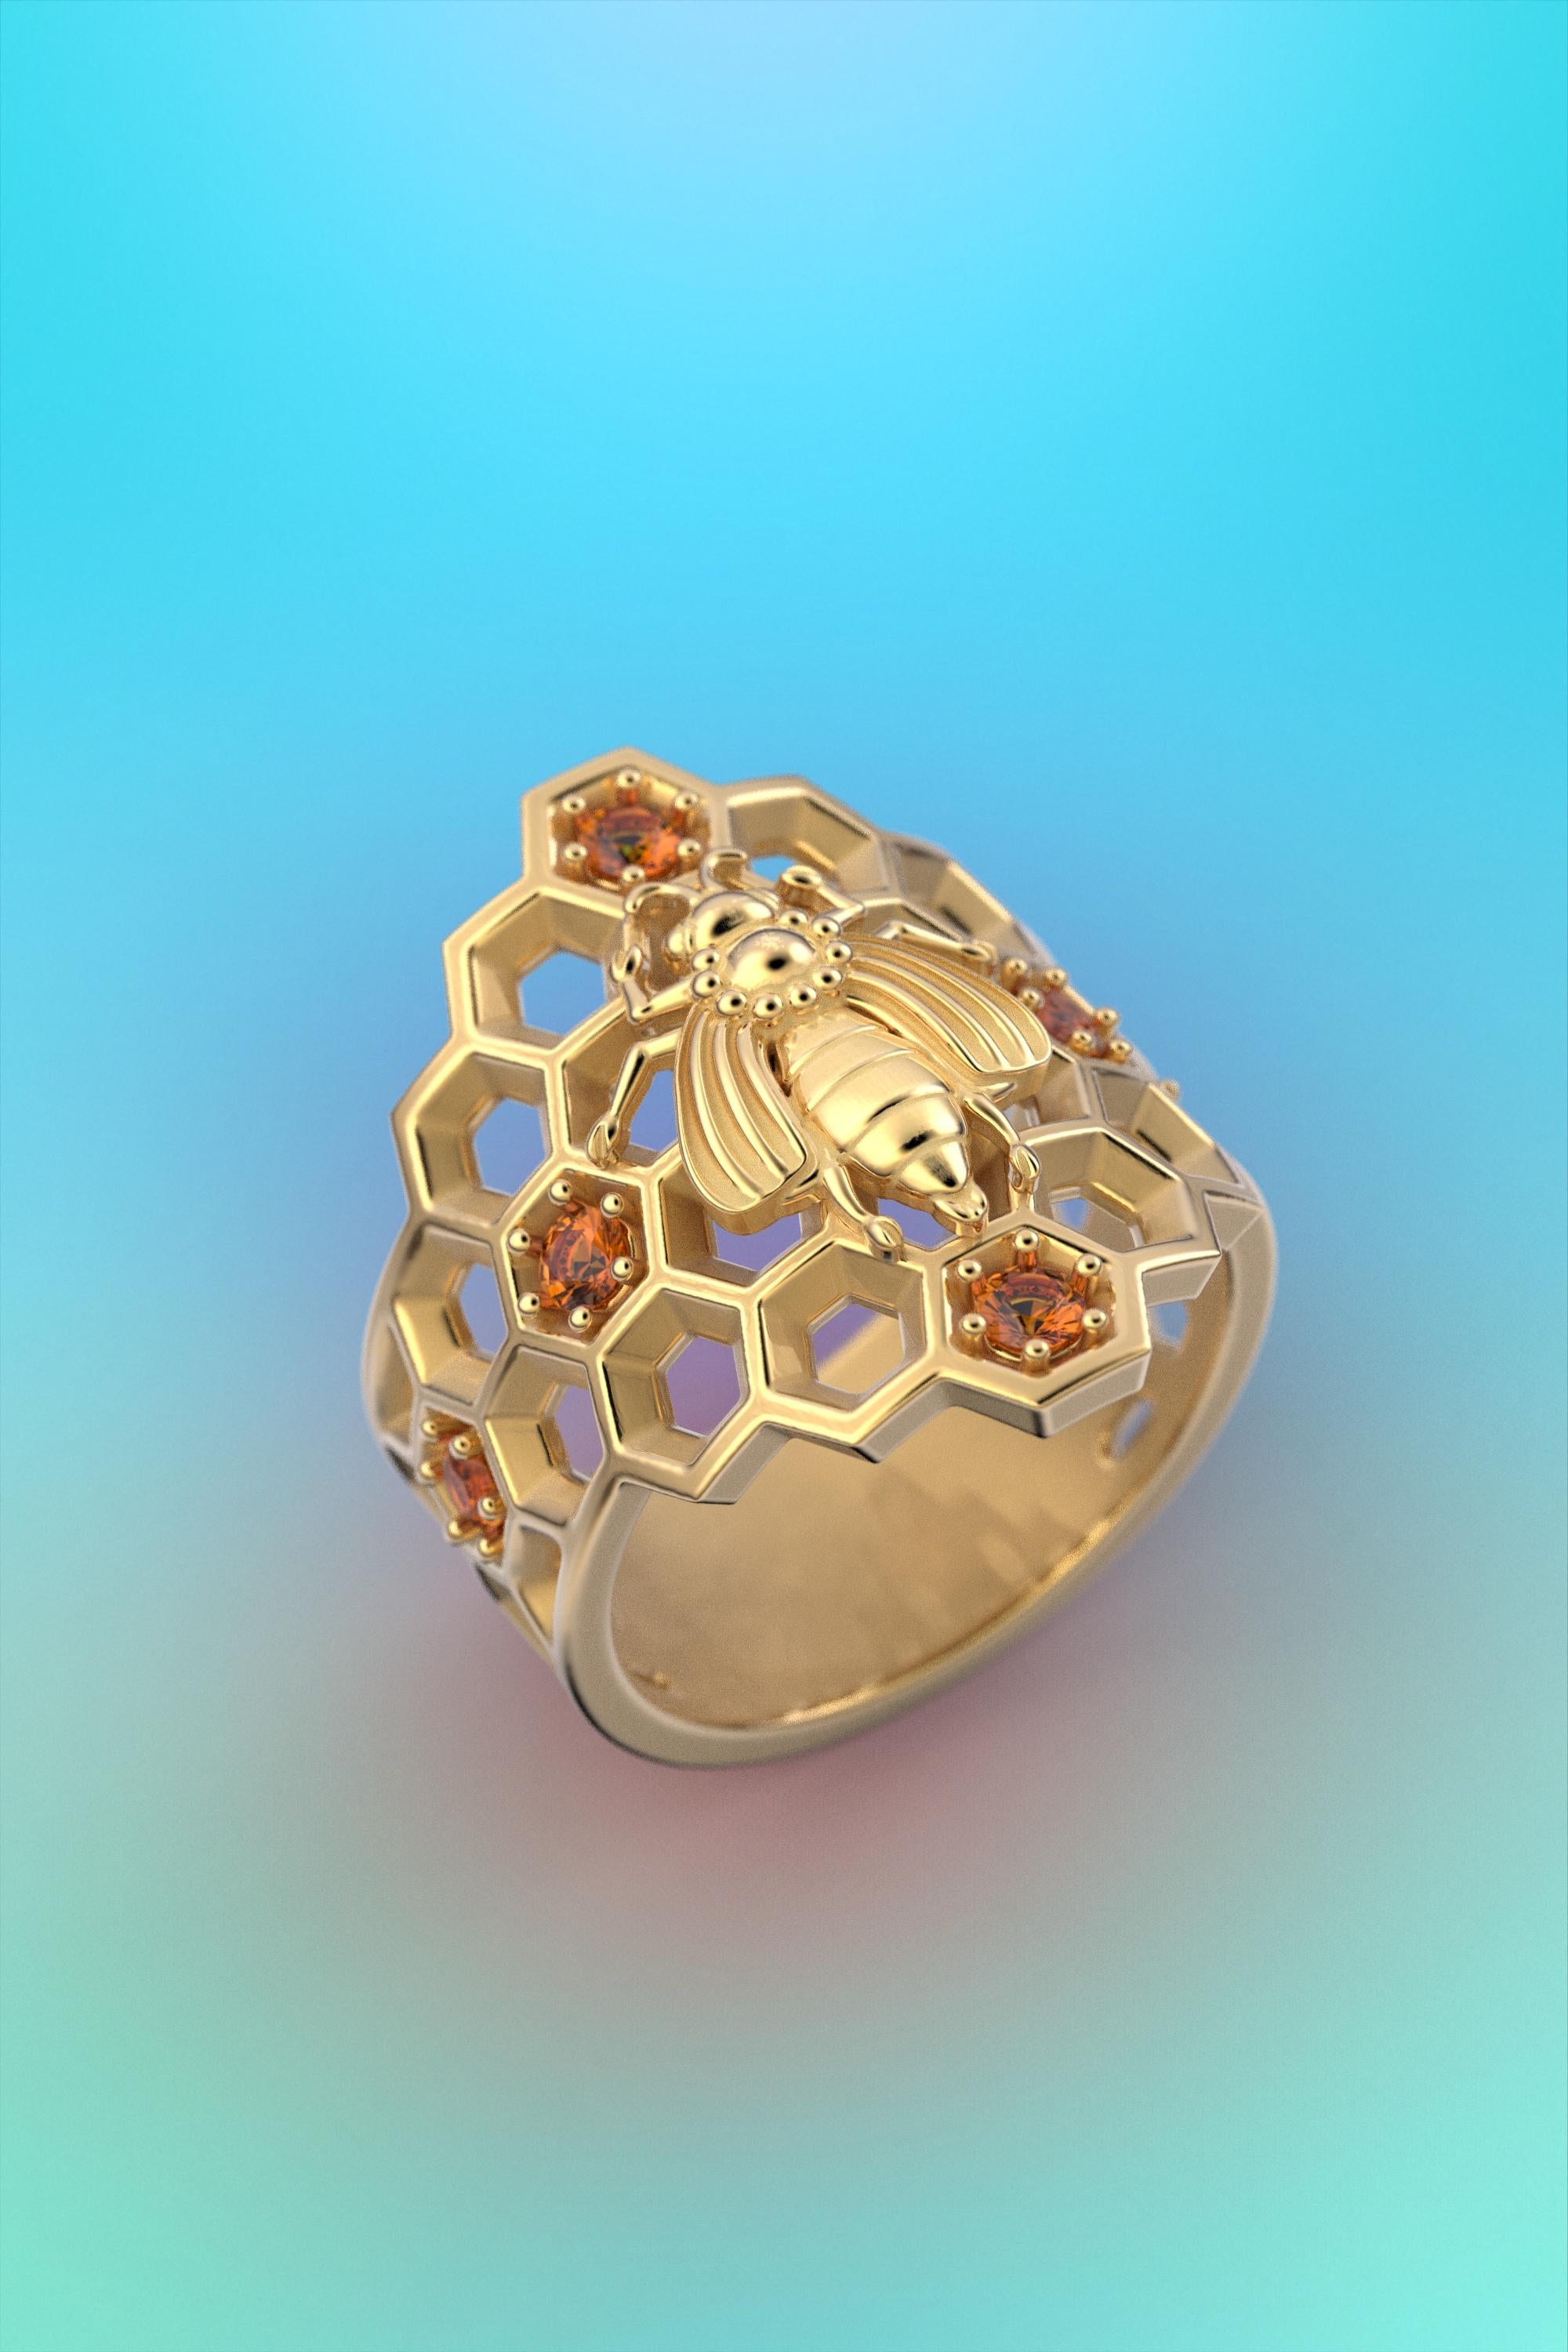 For Sale:   Honeycomb Bee Ring in 18k Solid Gold with natural Orange Spessartite Garnet 6